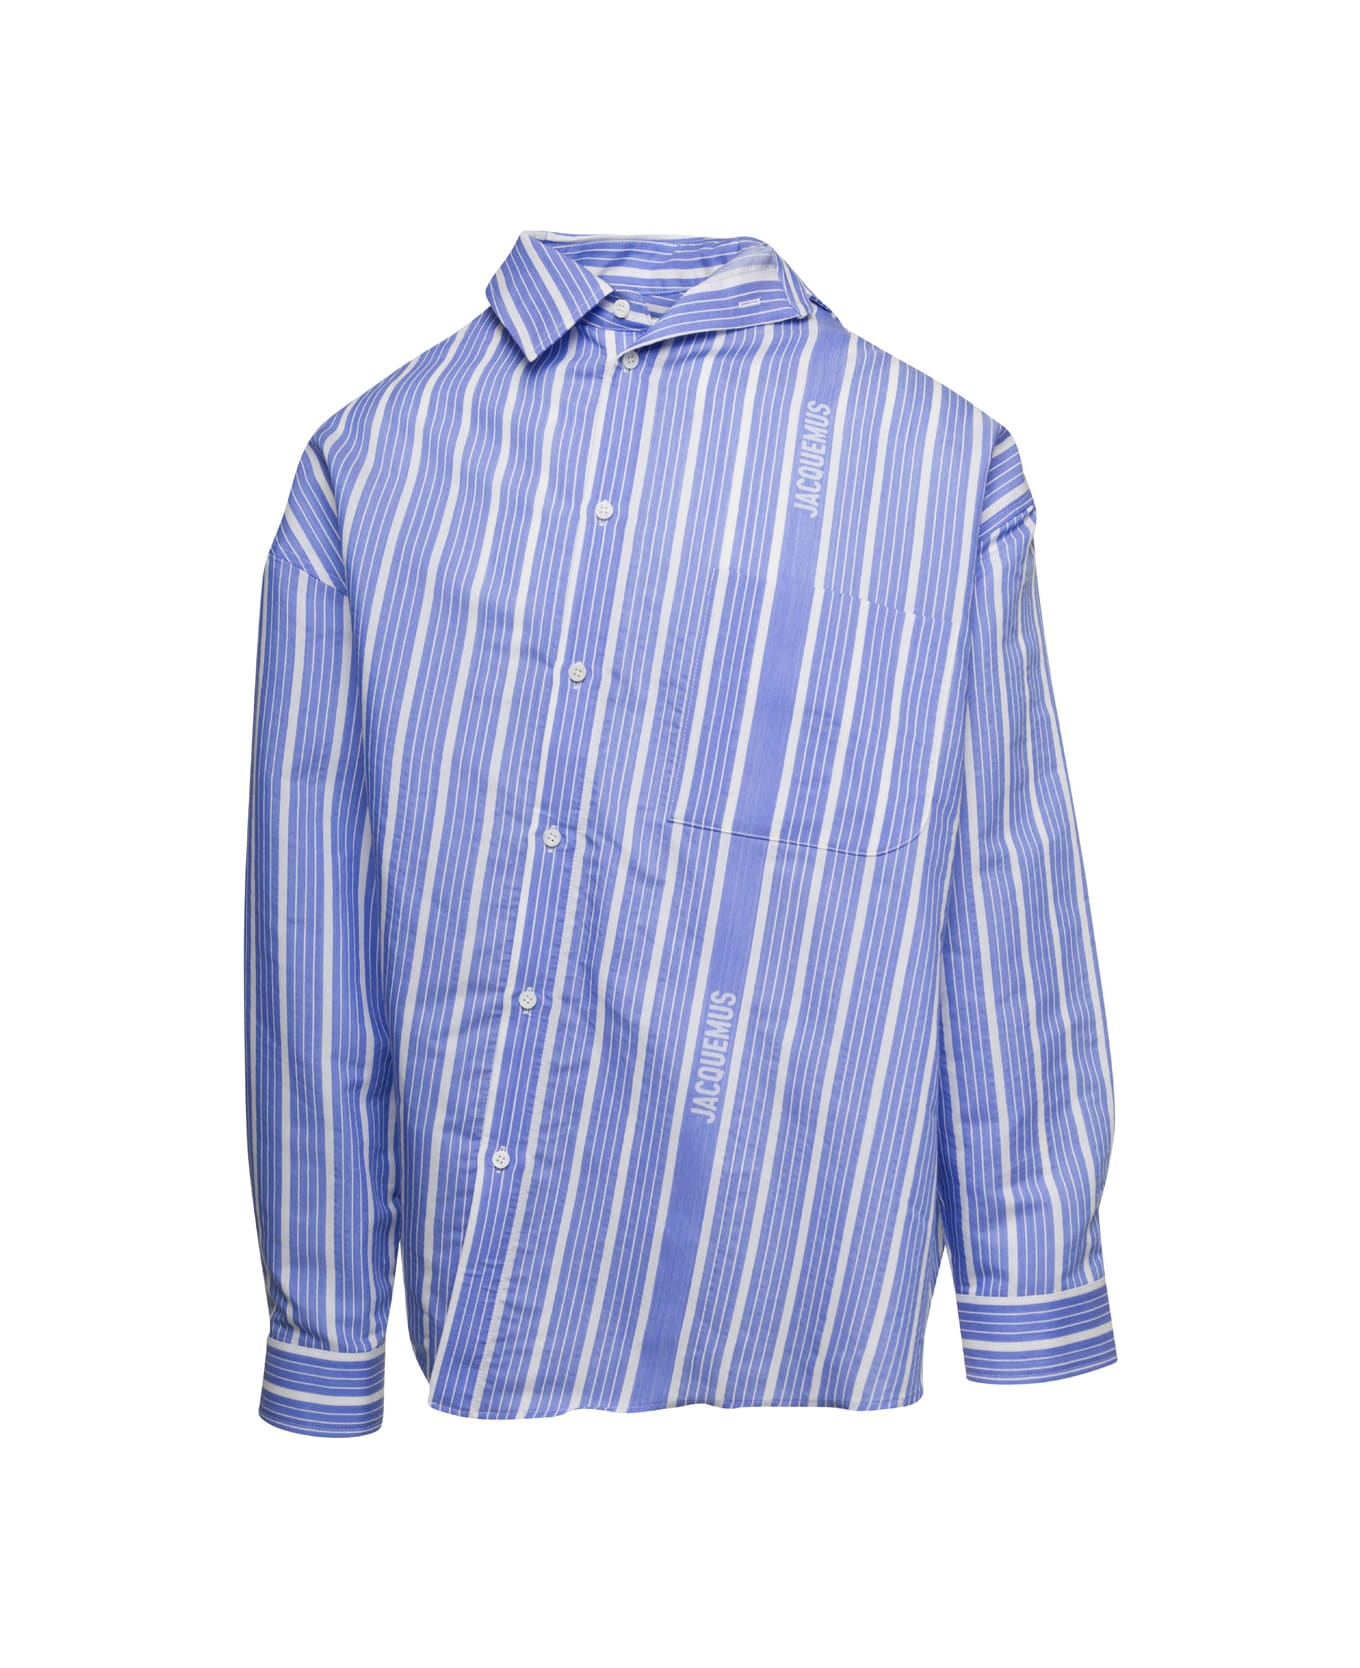 Jacquemus Cuadro Striped Silk-blend Shirt - Jcqud bus. lg stp blue/wh